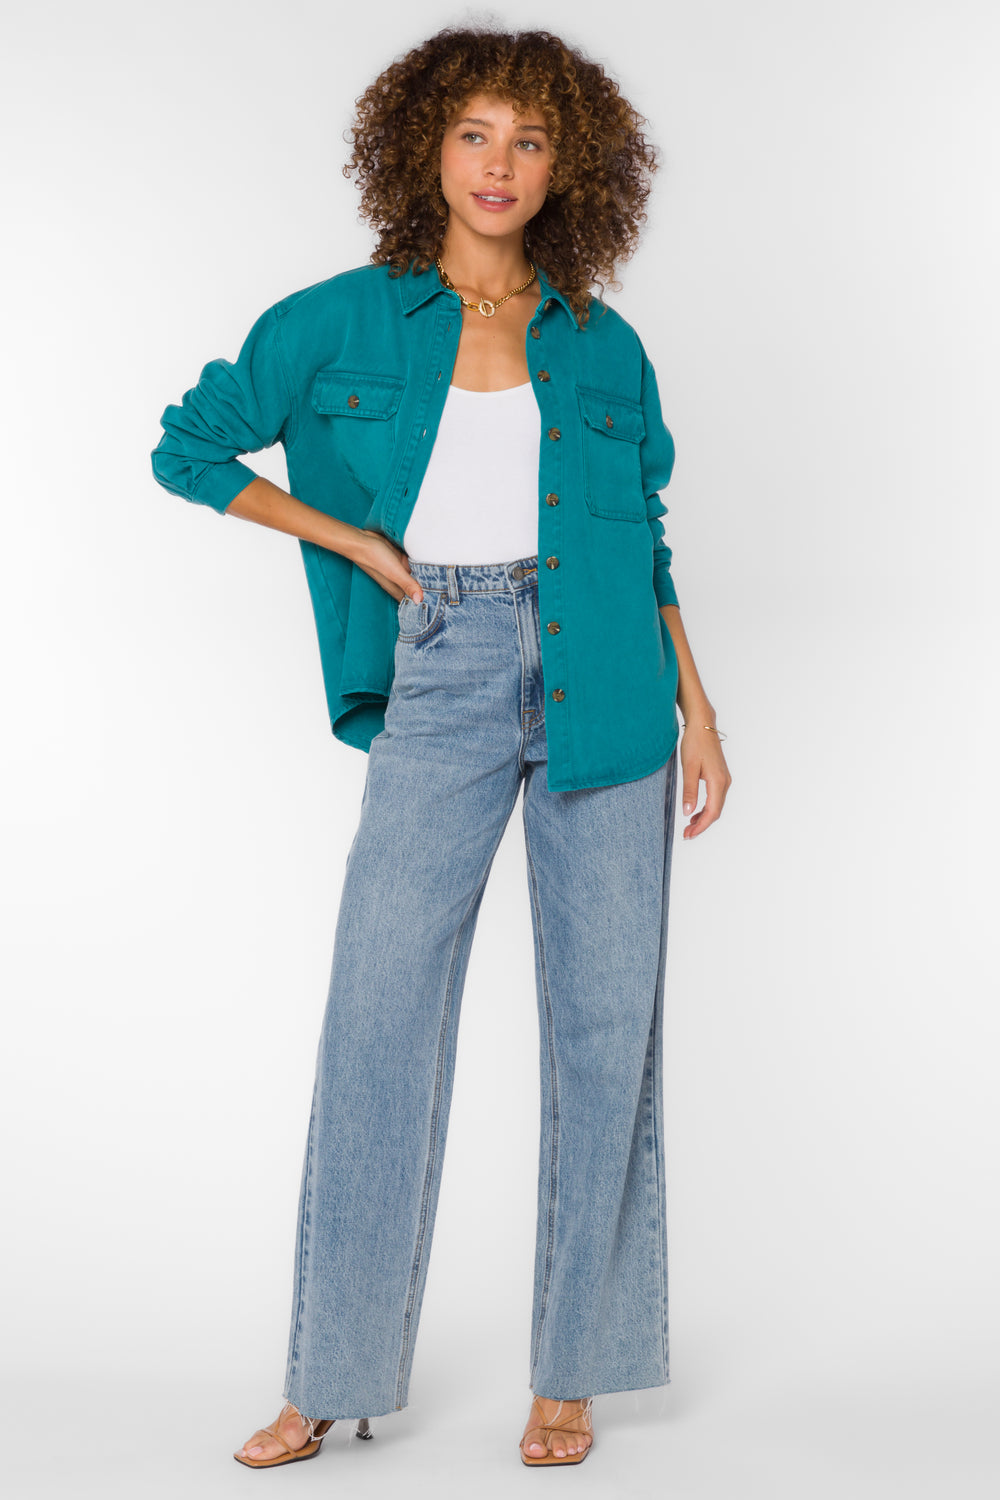 Carmele Peacock Shacket - Jackets & Outerwear - Velvet Heart Clothing